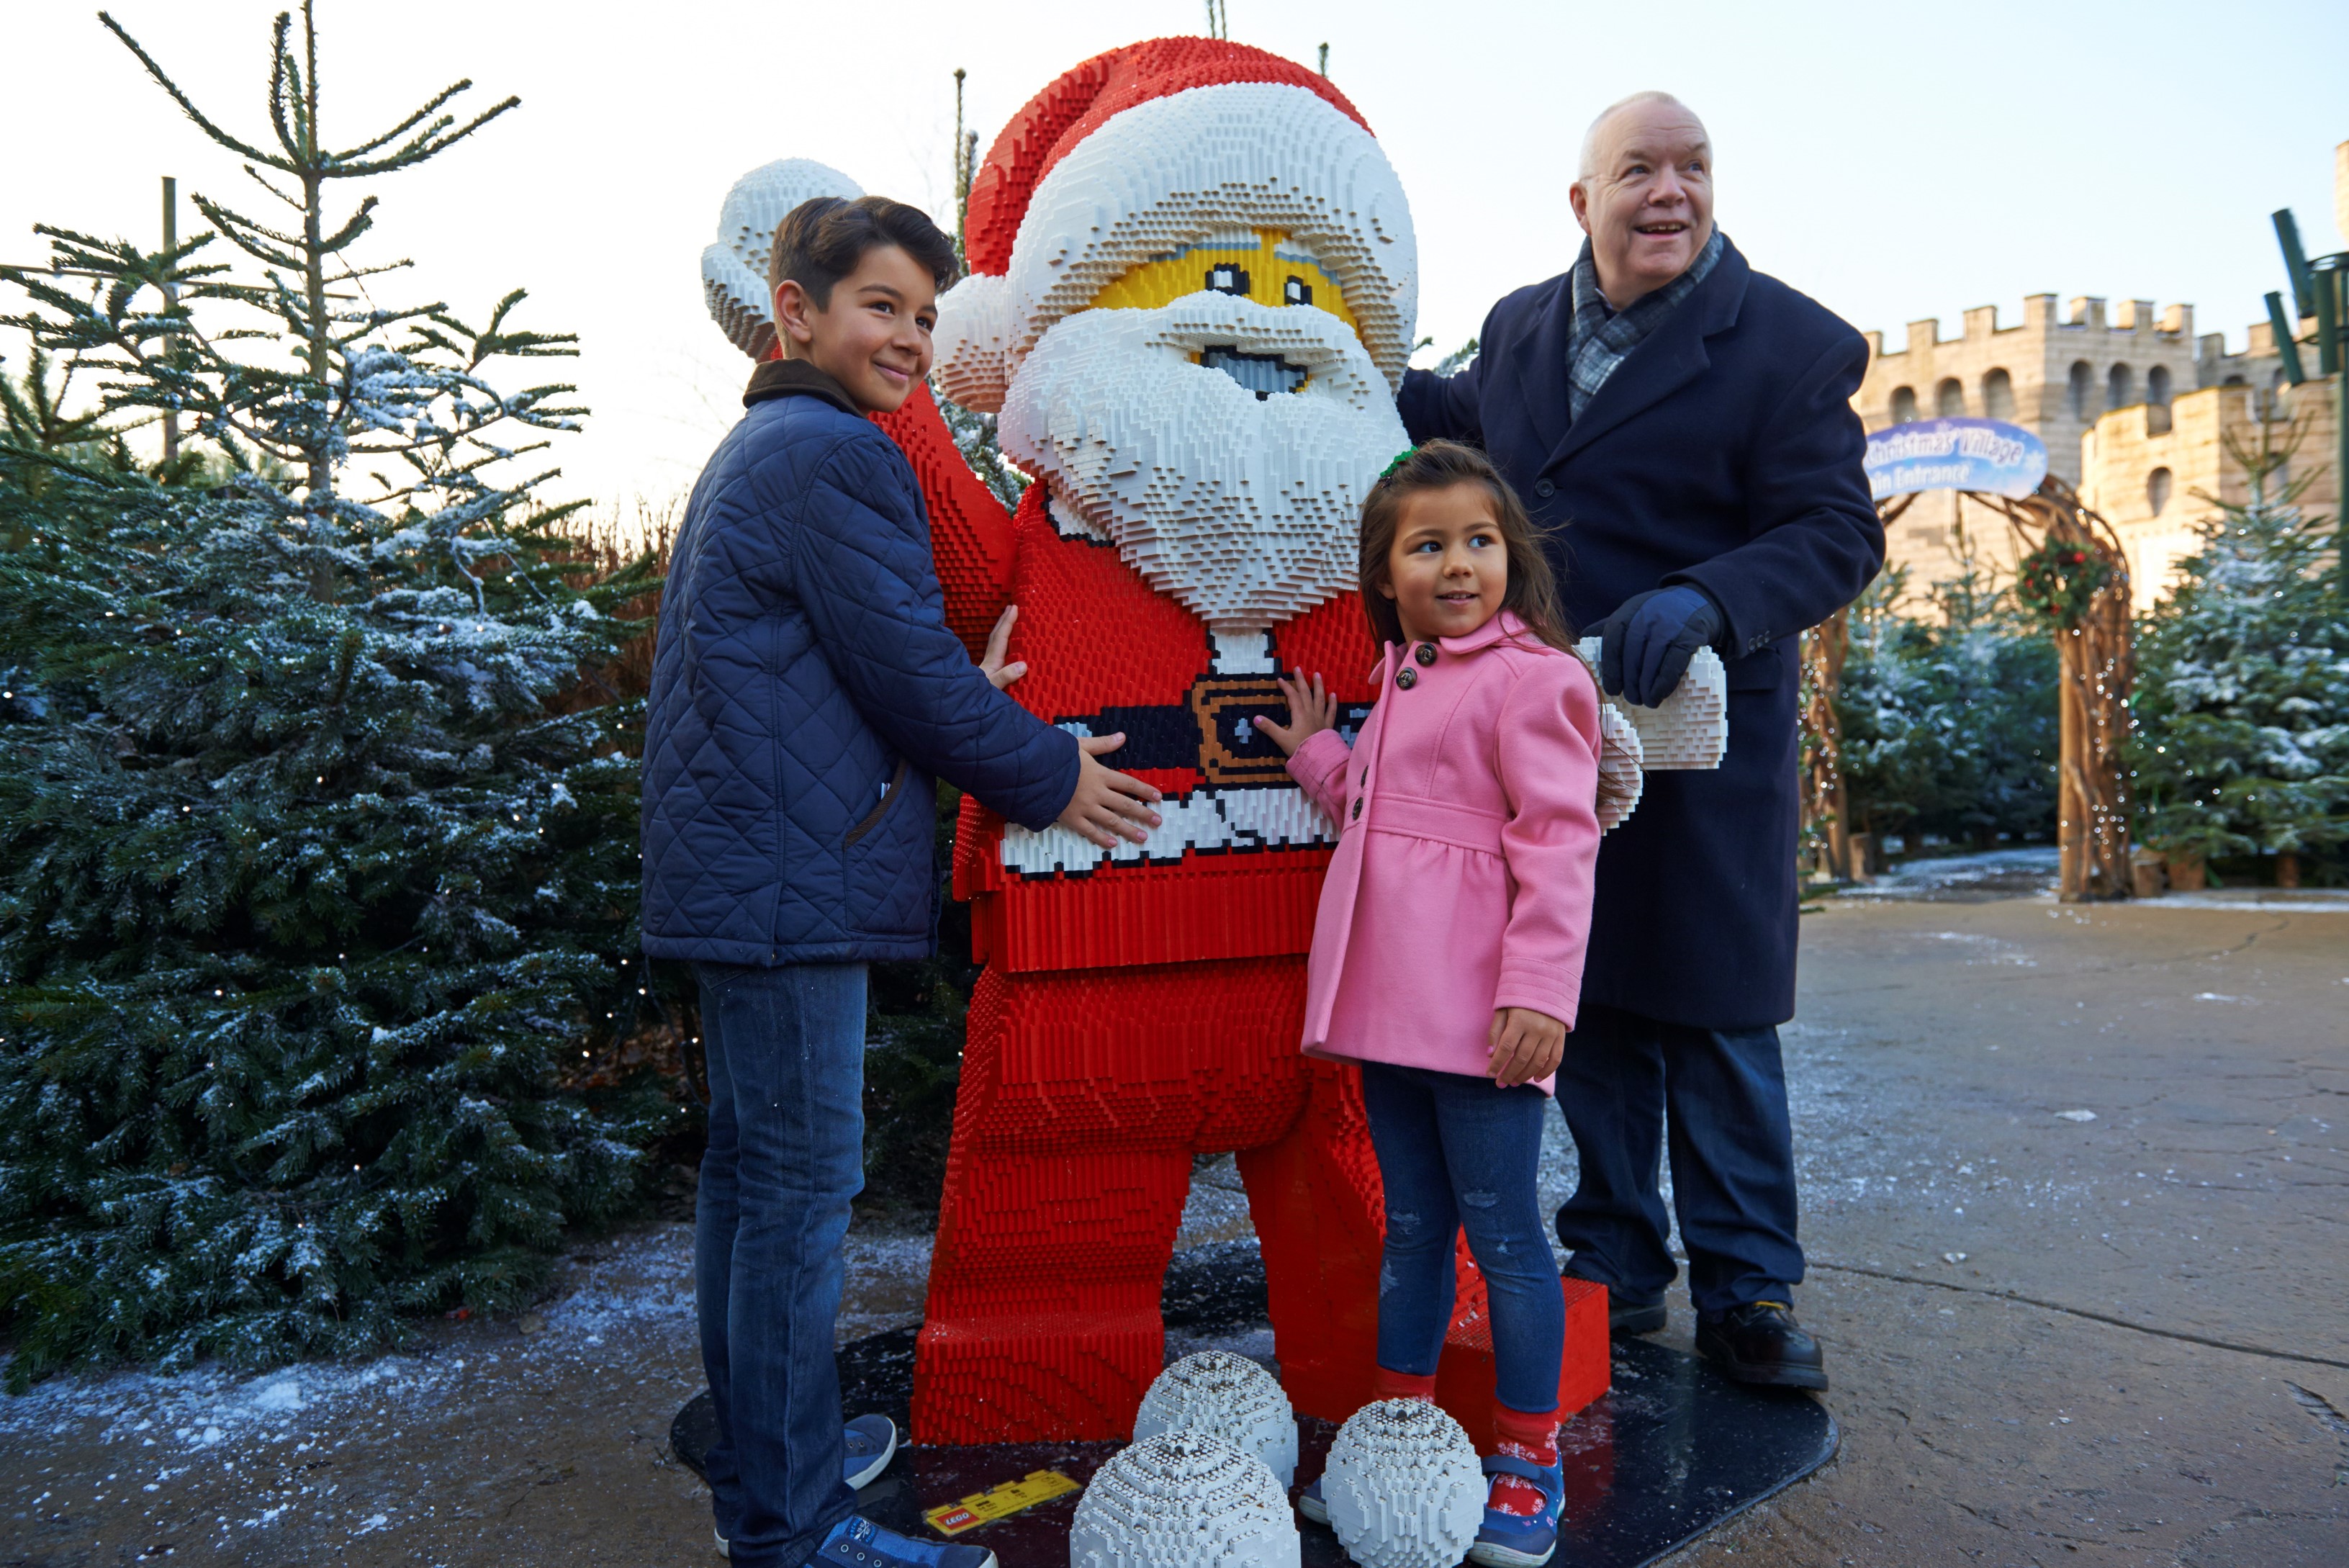 Family with LEGO Santa at LEGOLAND at Christmas